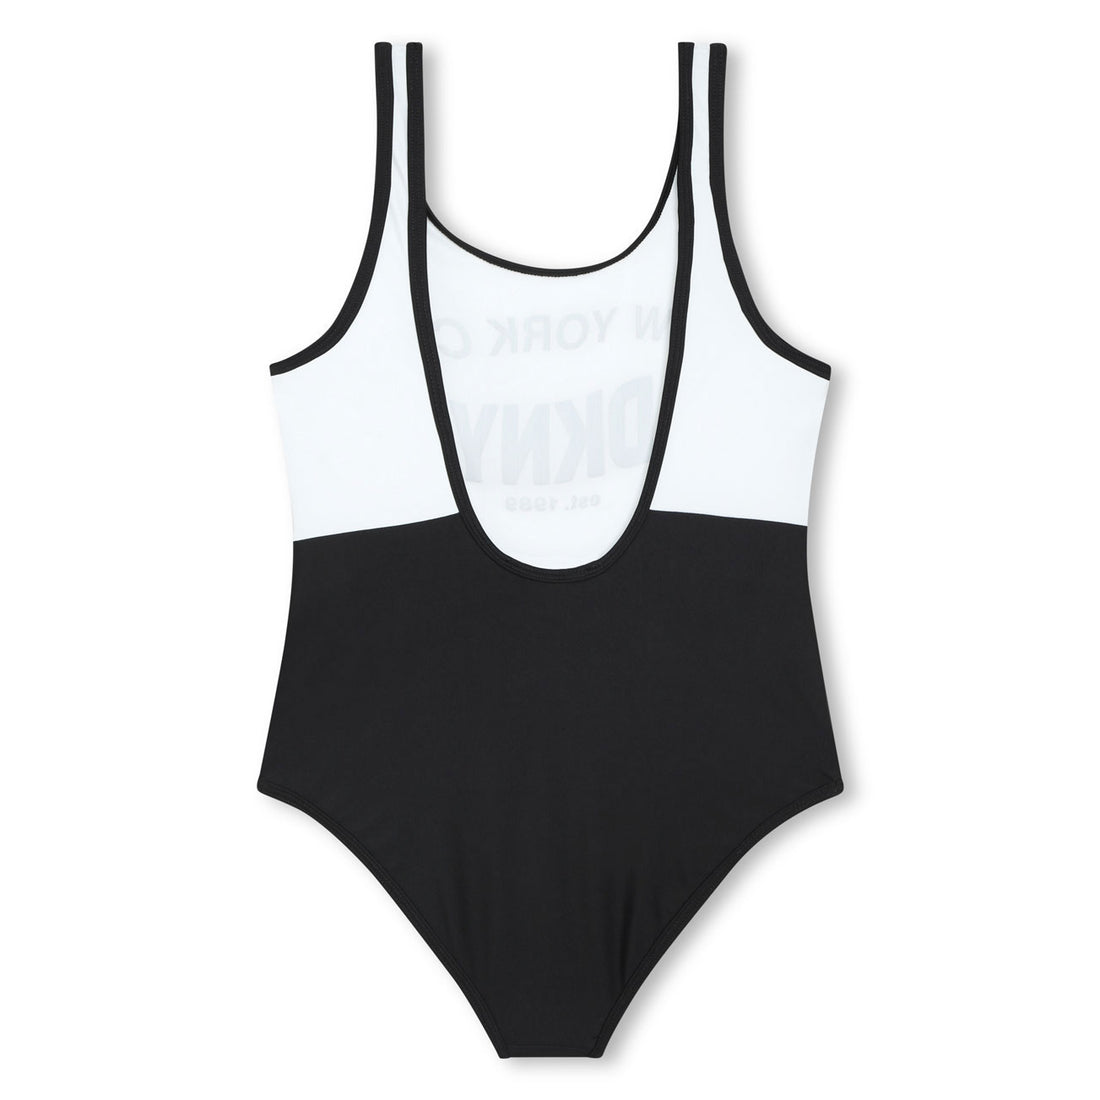 DKNY Black White Color Block Swimsuit